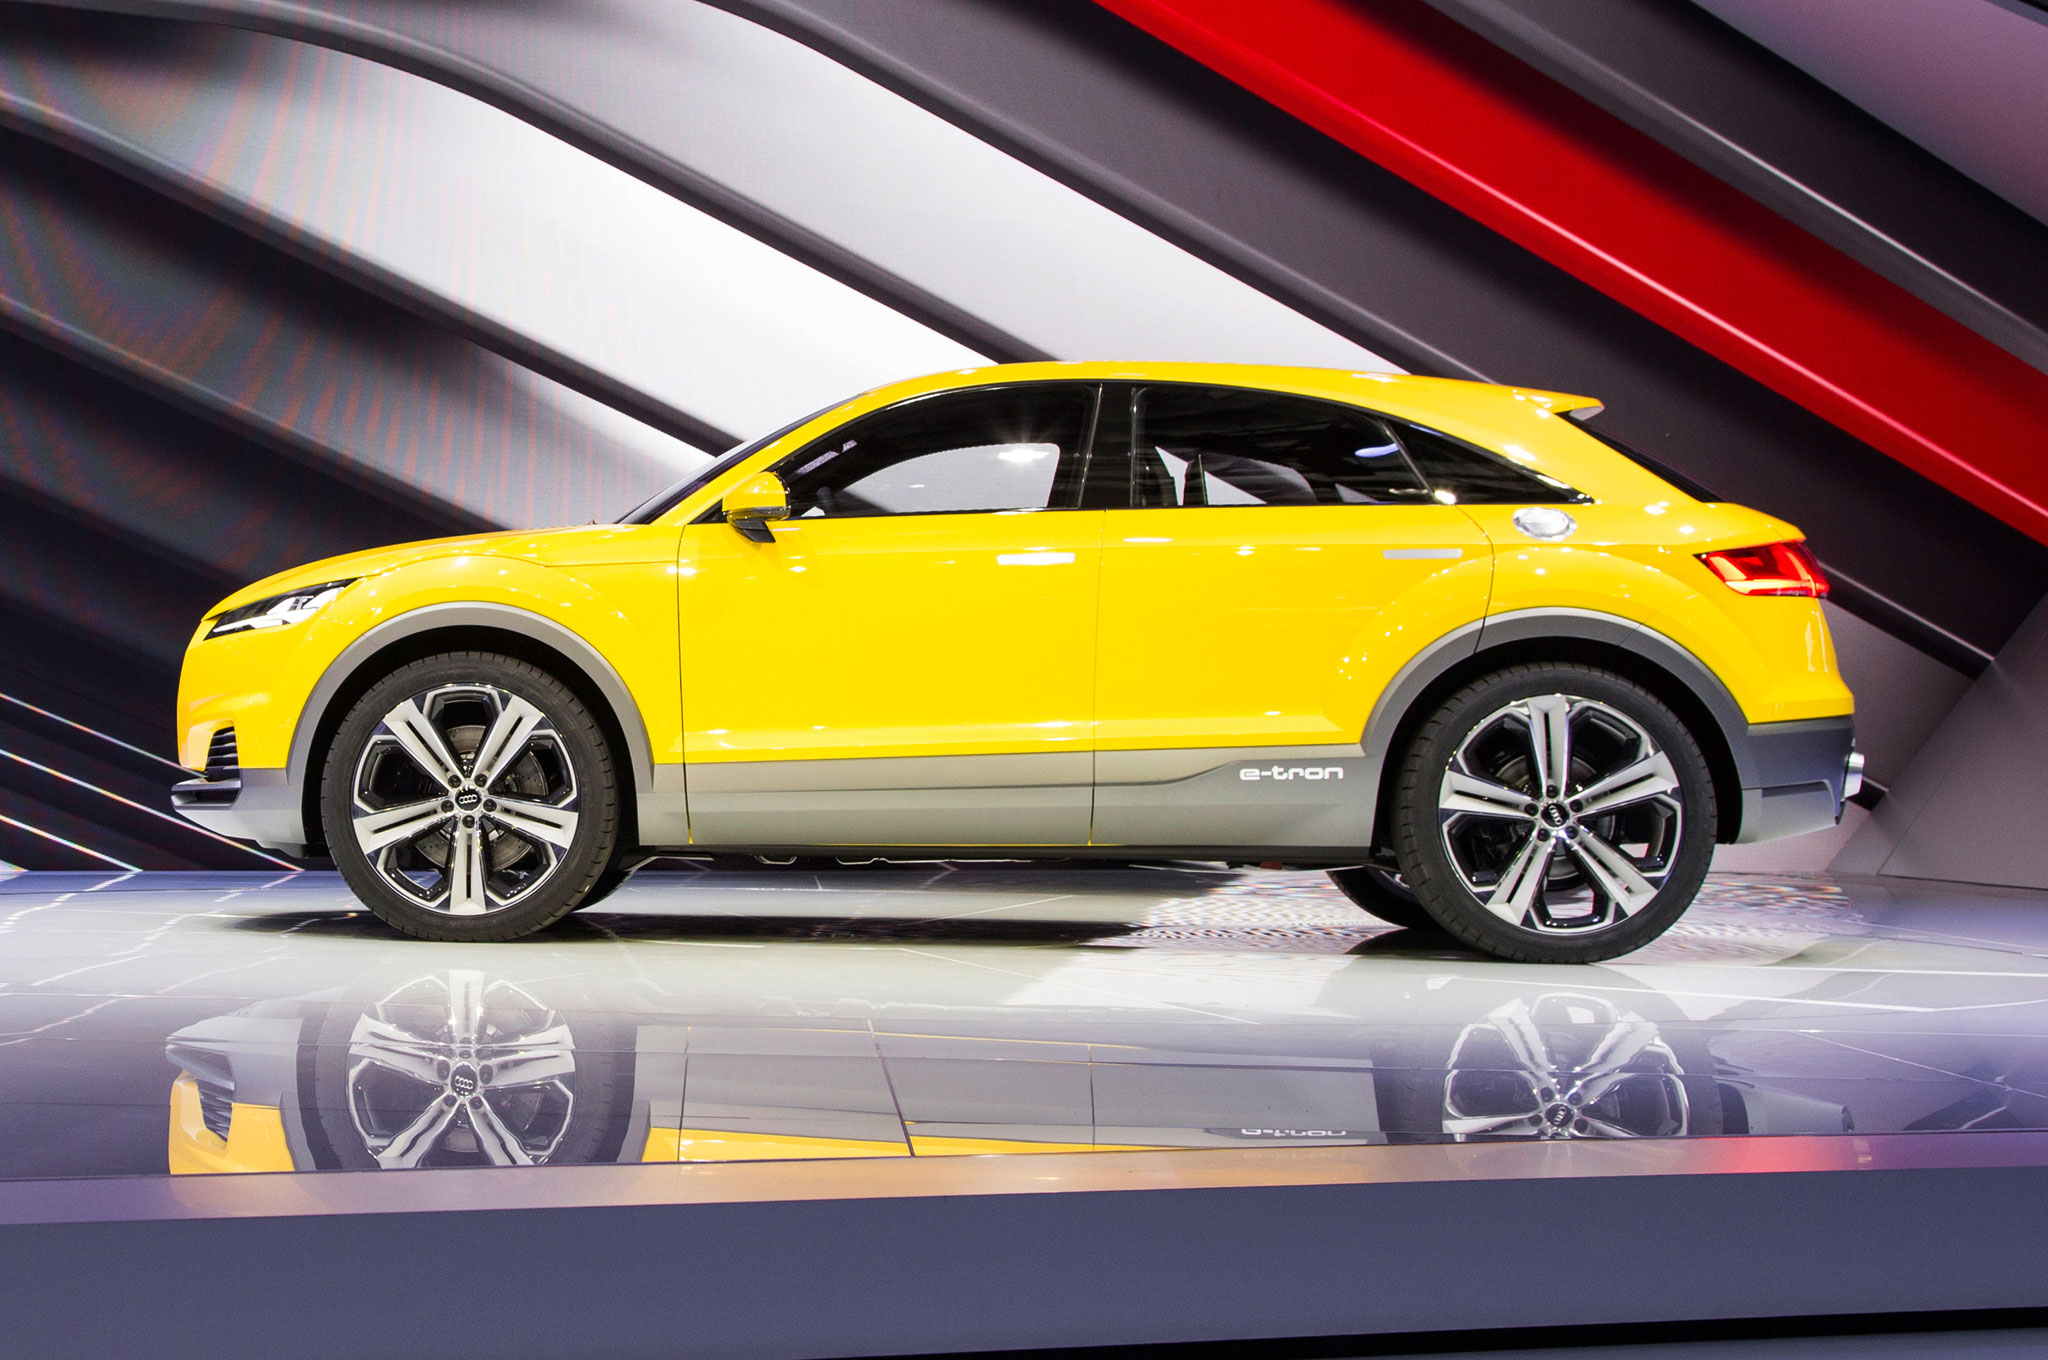 HQ Audi TT Offroad Concept Wallpapers | File 419.85Kb